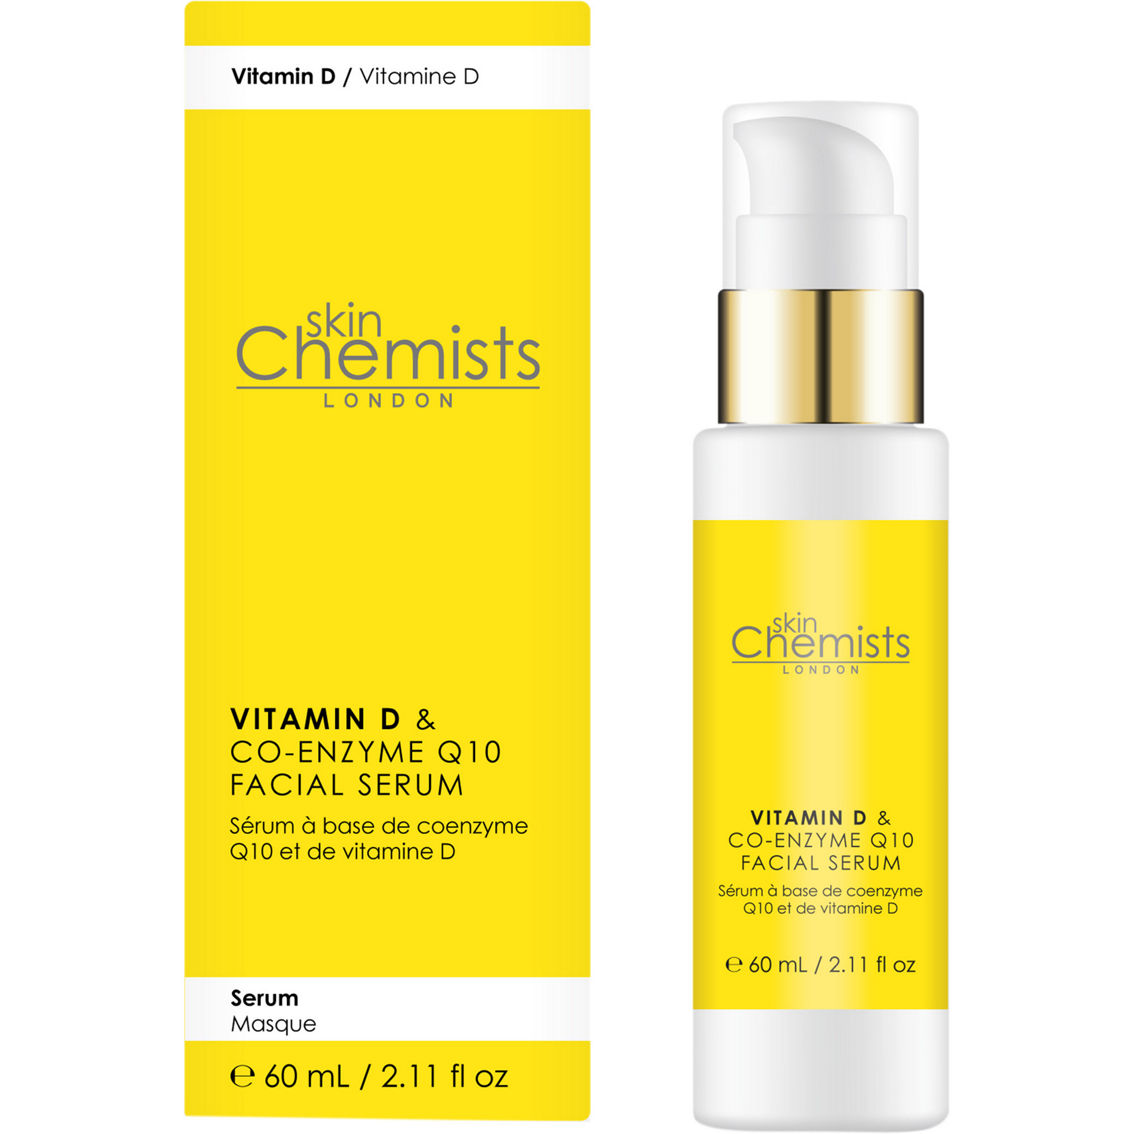 skinChemists Vitamin D Co-Enzyme Q10 & Vitamin D Serum - Image 2 of 2